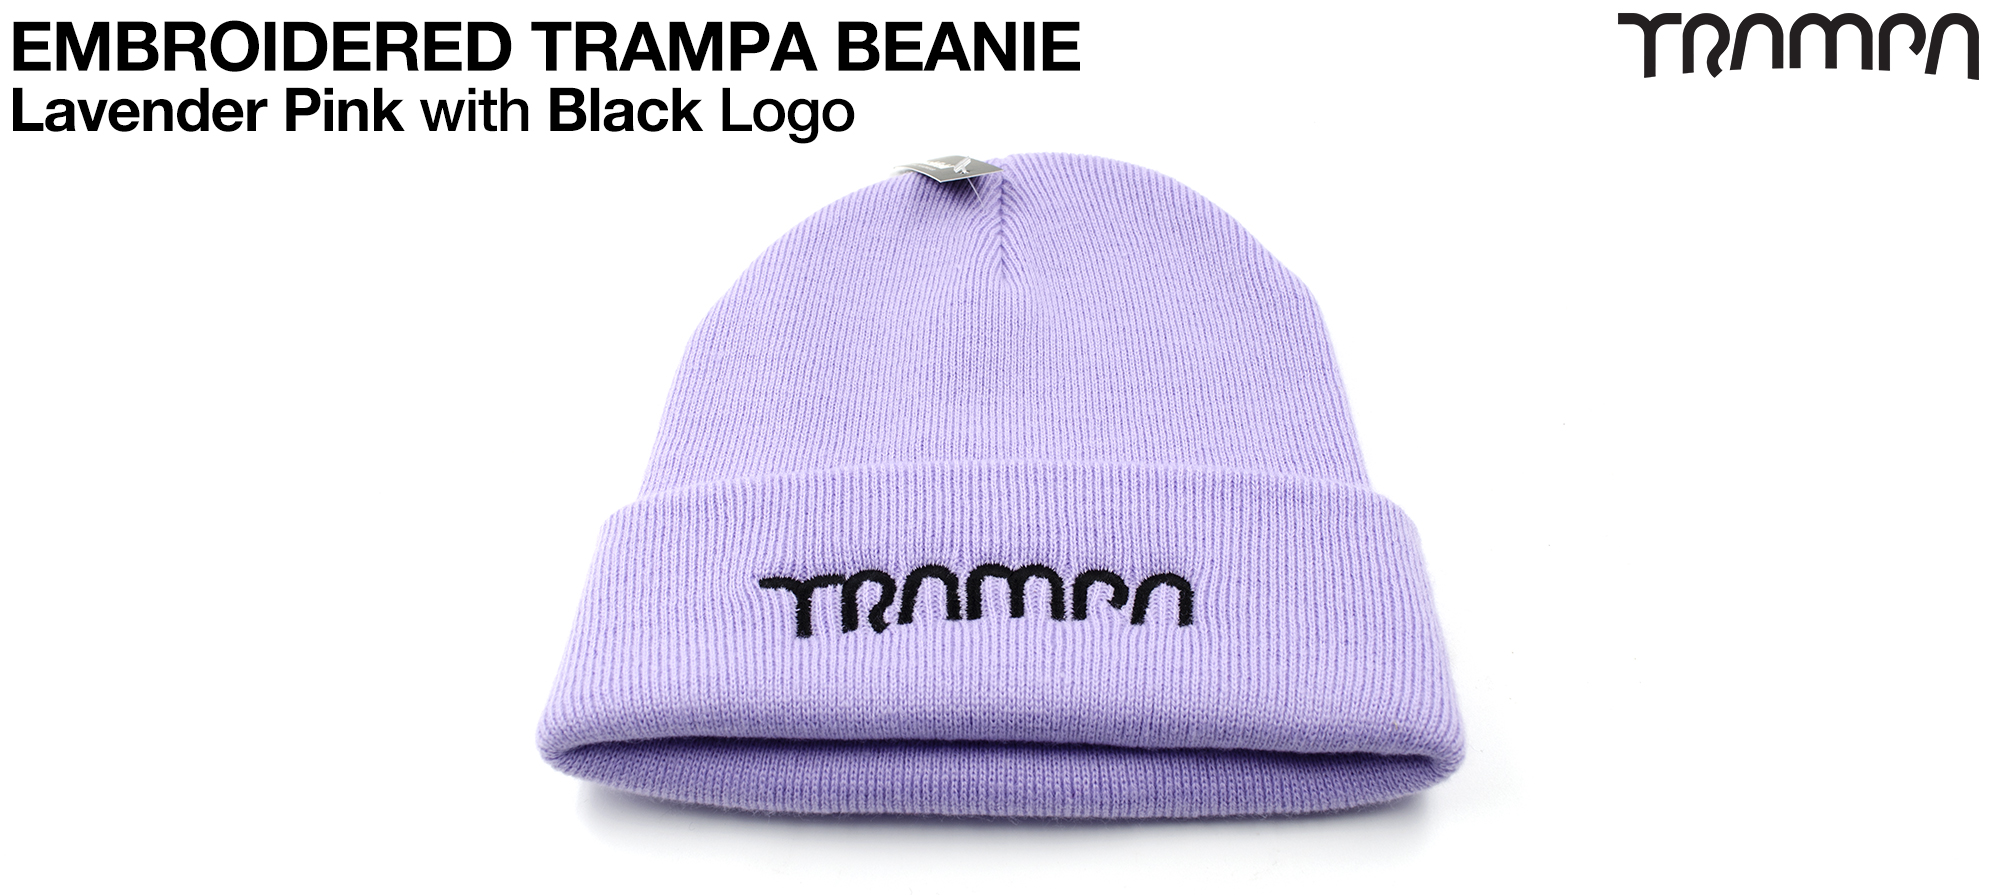 Lavender PINK Beanie with BLACK TRAMPA logo 